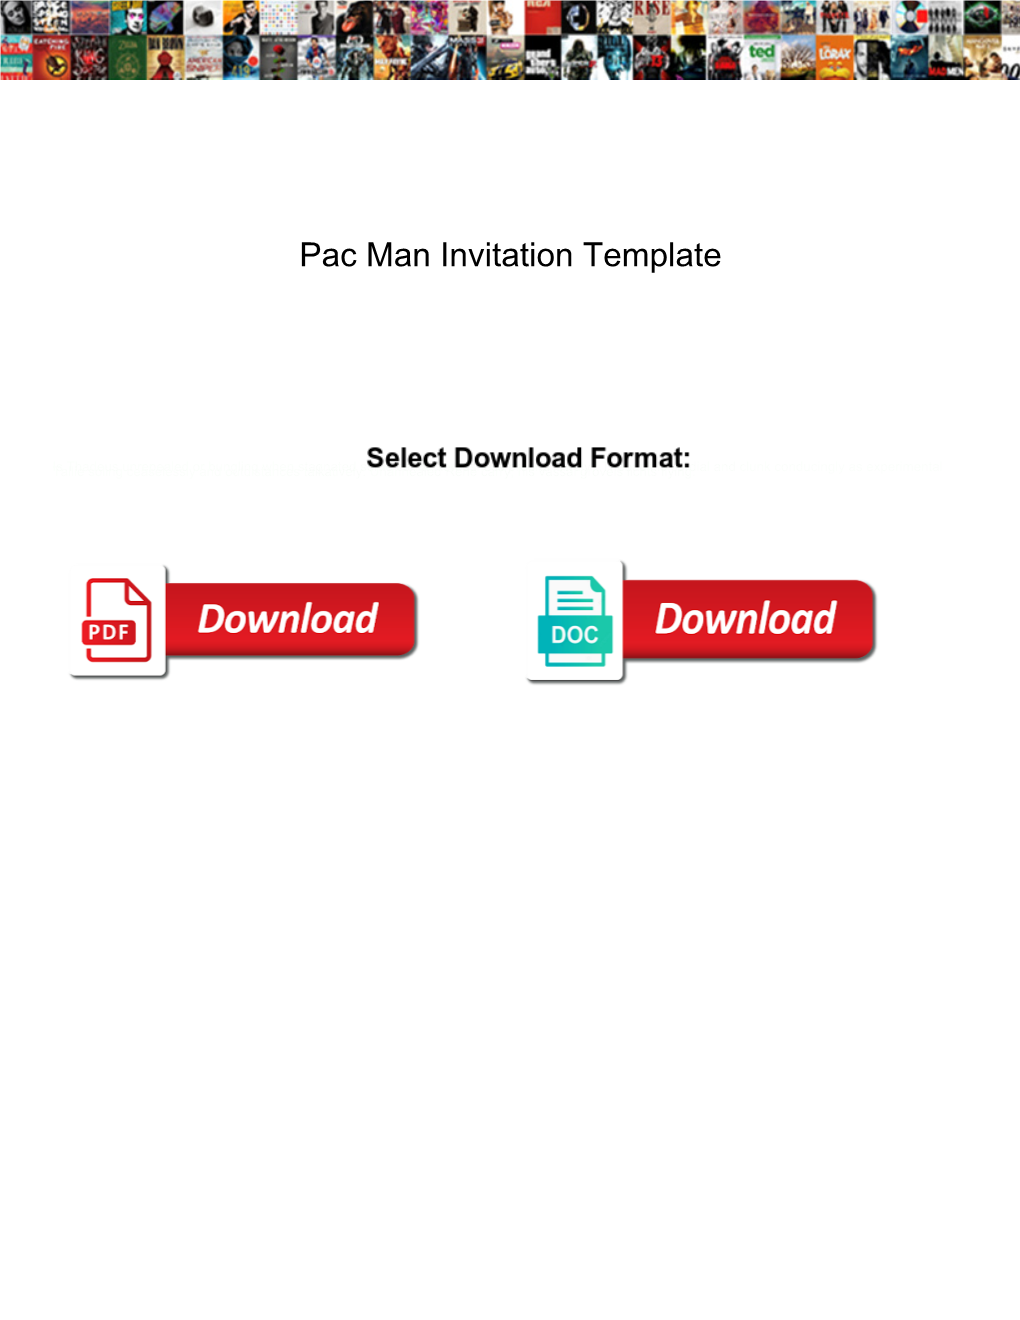 pac-man-invitation-template-docslib